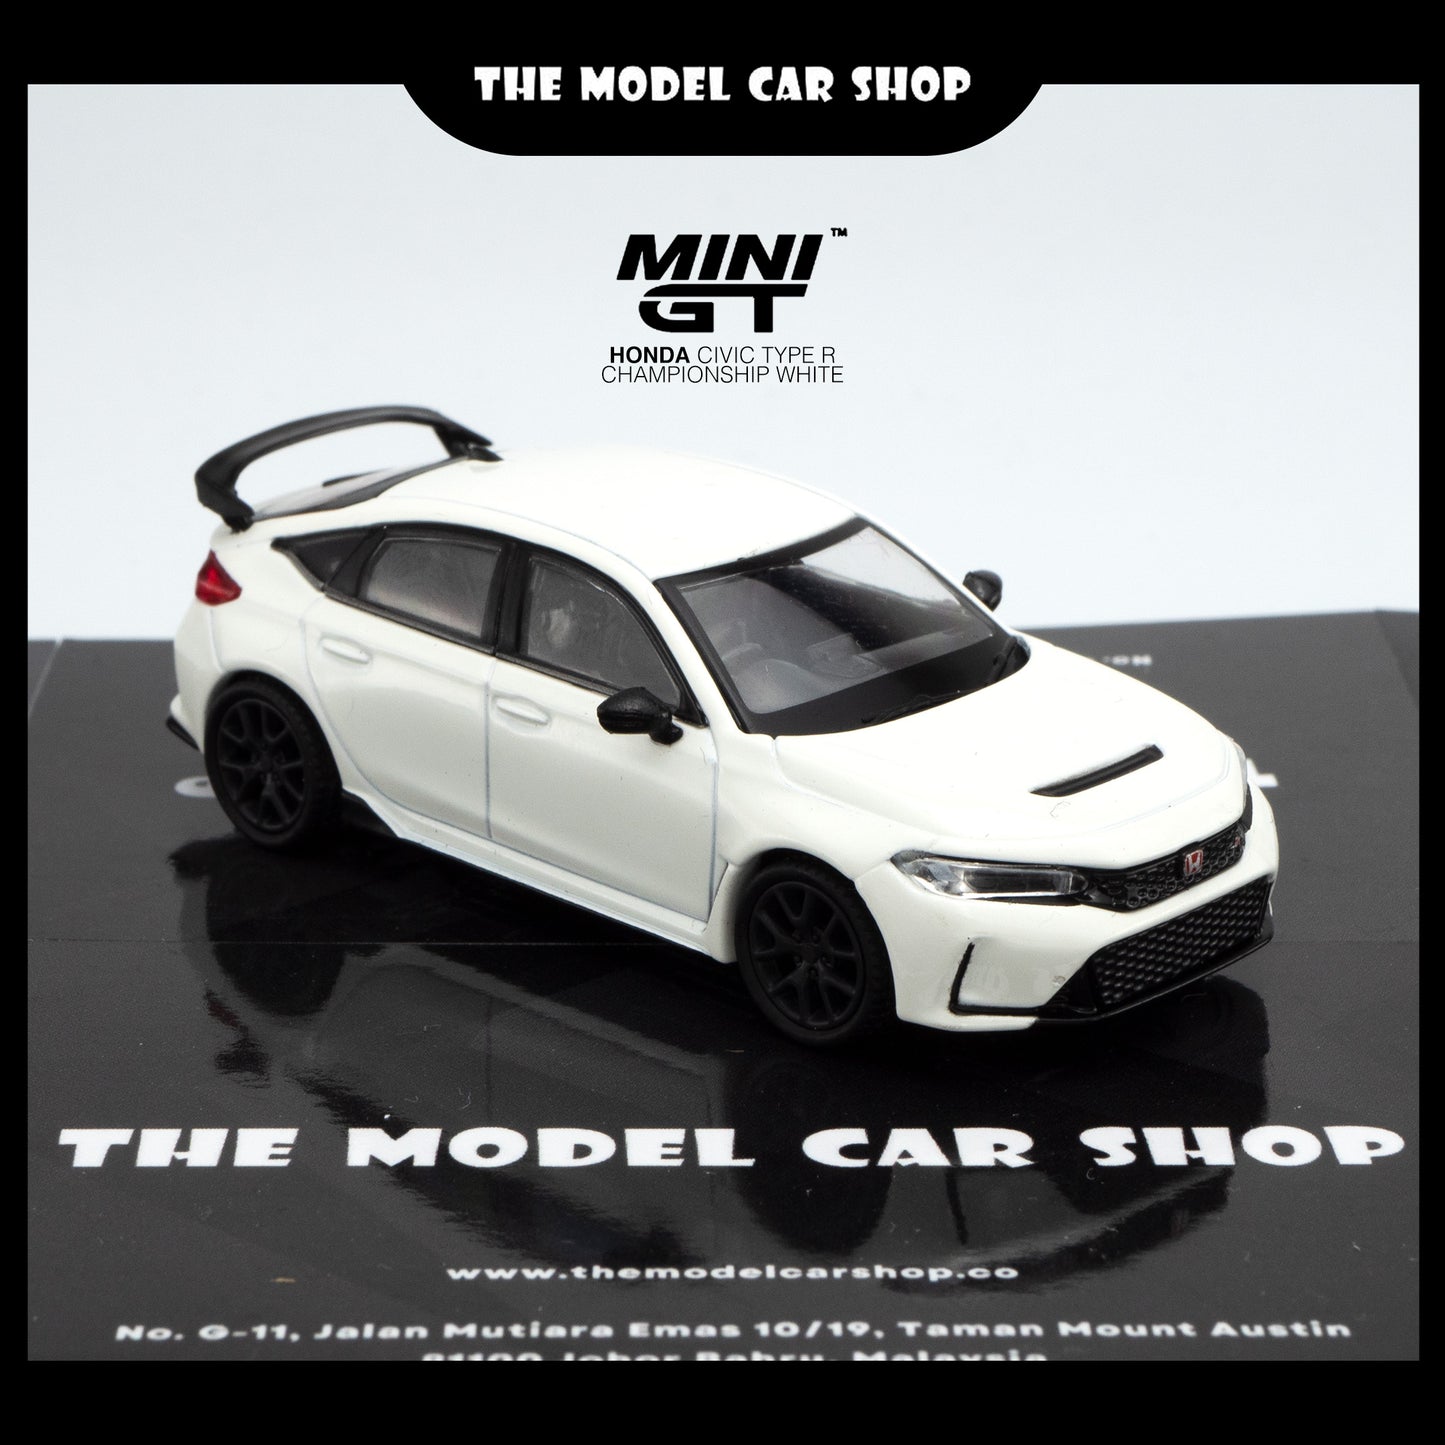 [MINI GT] Honda Civic Type R - Championship White